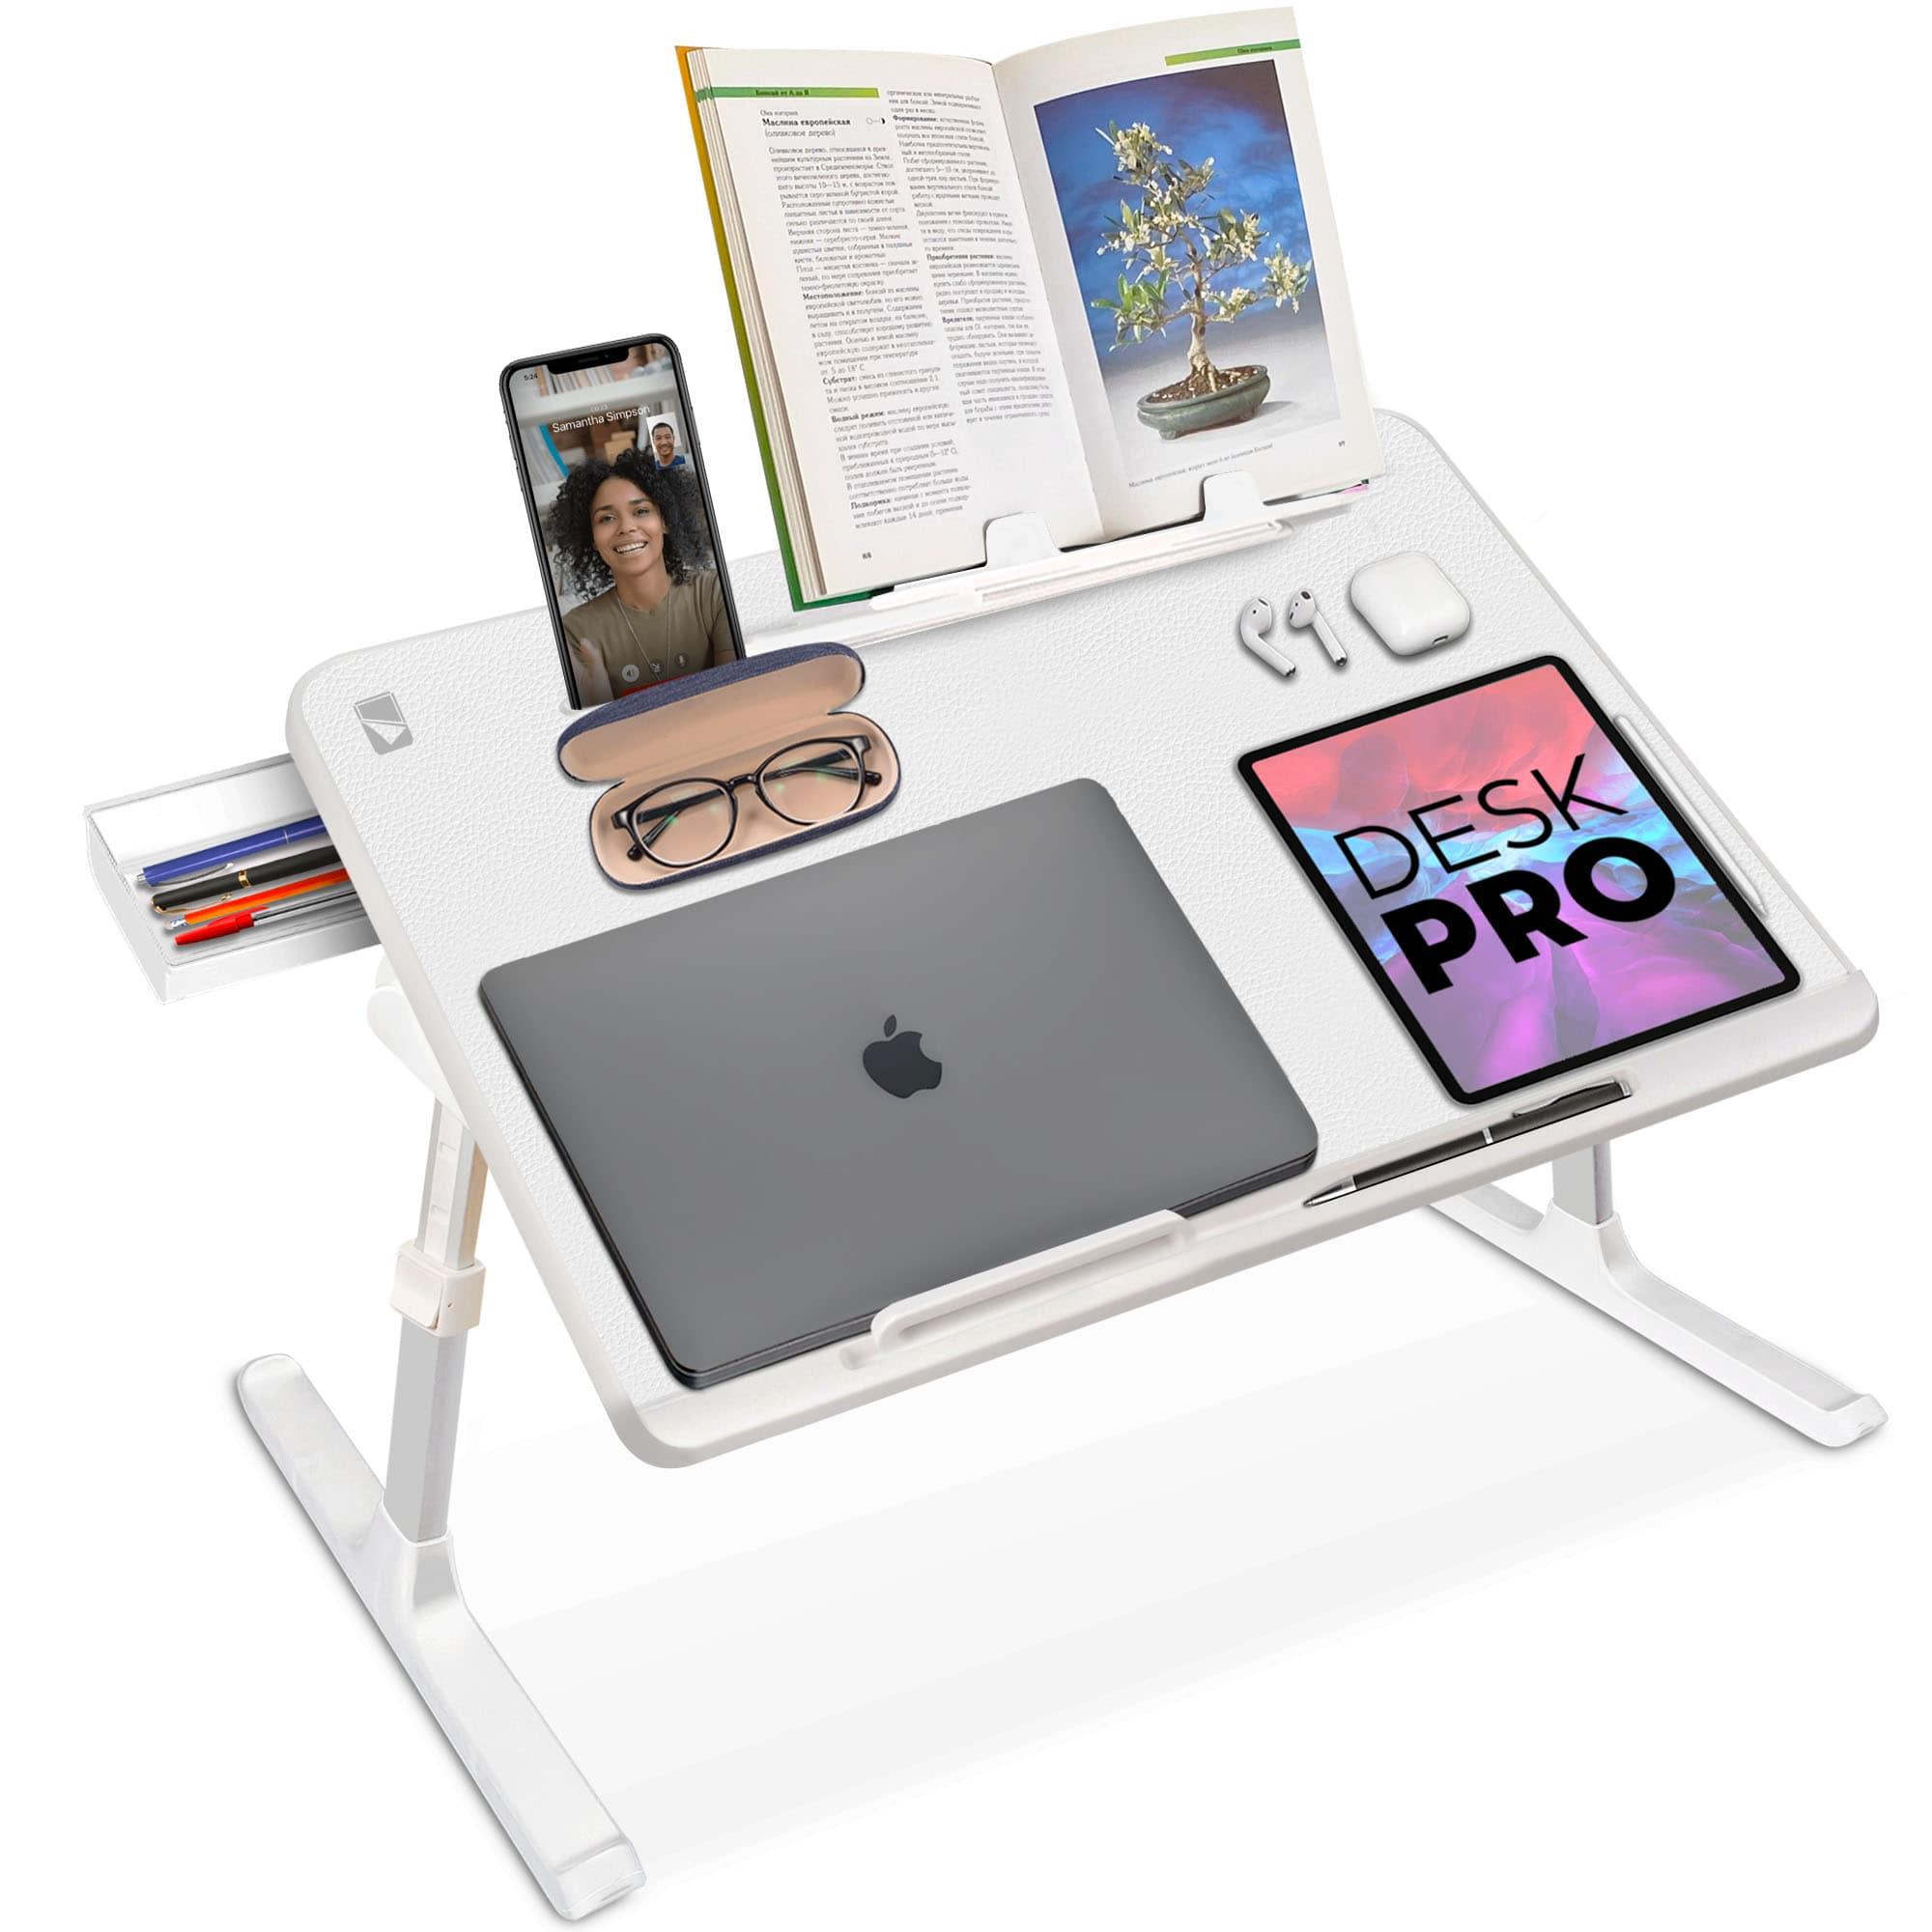 [NEW] Cooper Desk PRO Leather Folding Laptop Desk with Adjustable Height &  Tilt Angles